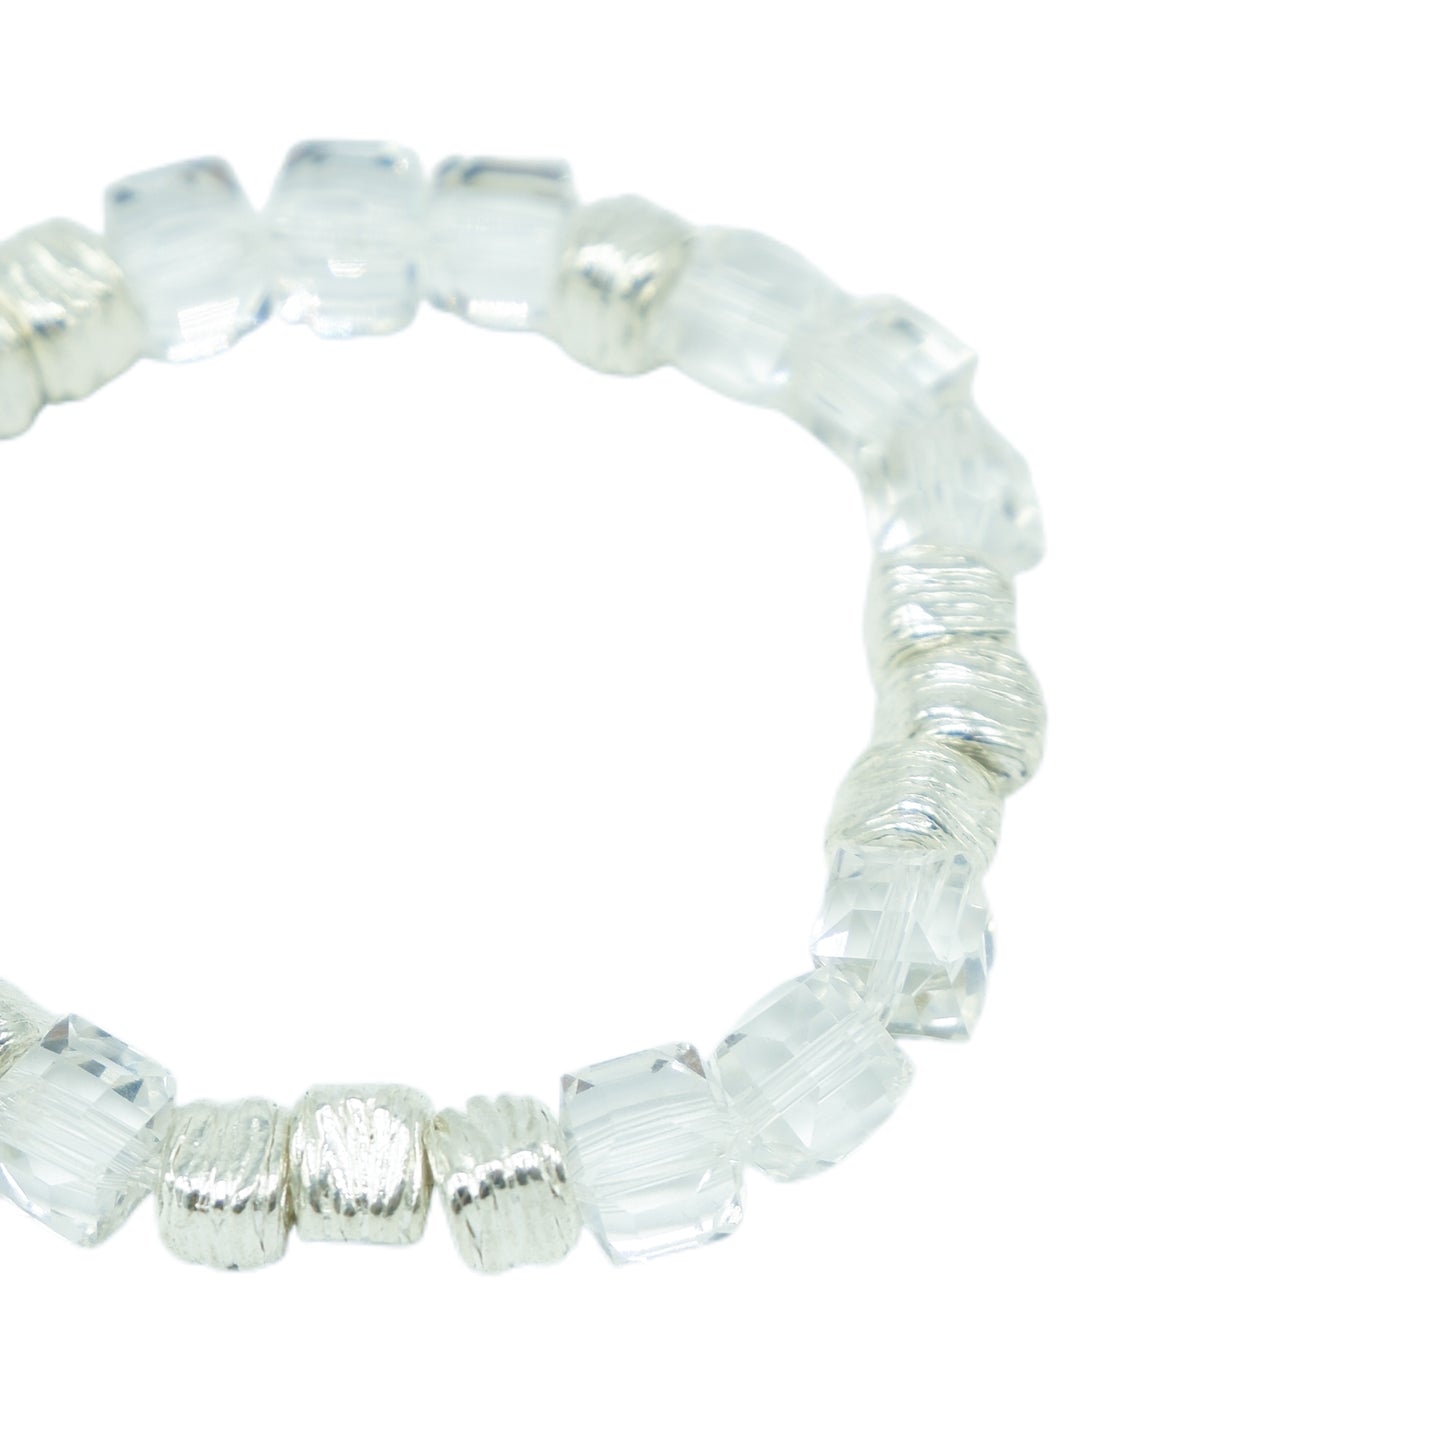 Clear quartz Tibetan Silver Bracelet Energy • Clarity • Balance